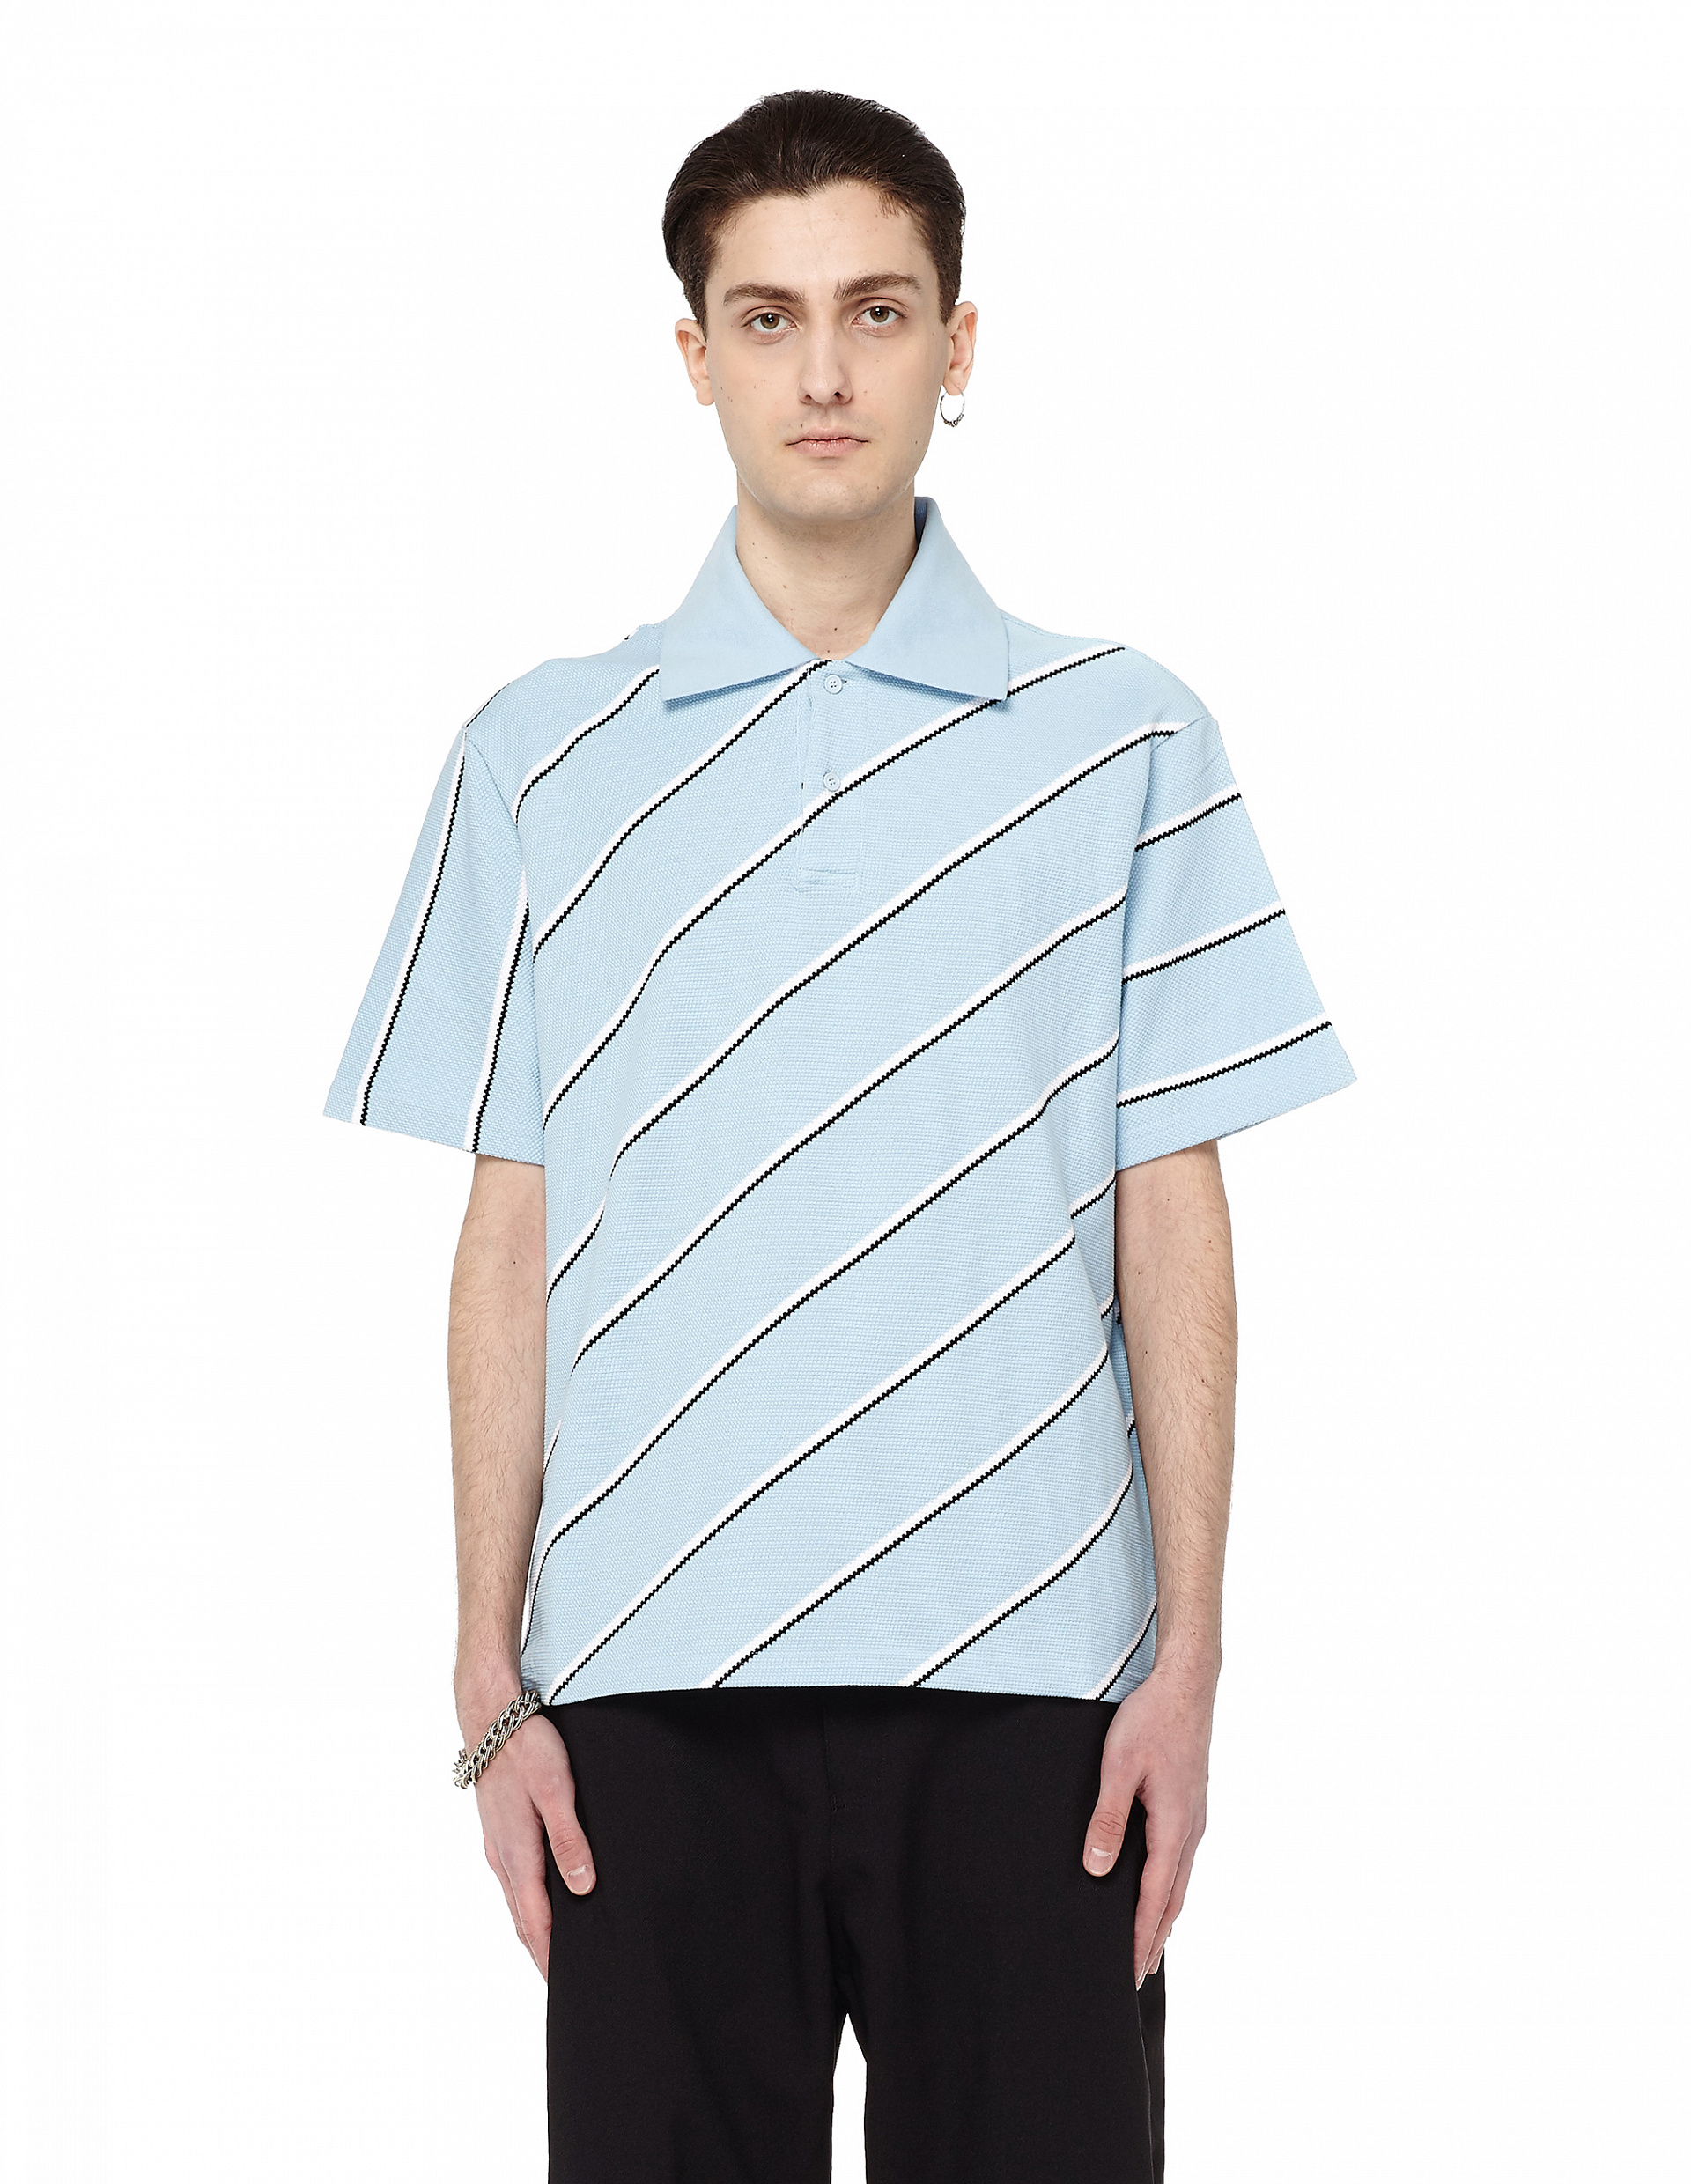 Buy Balenciaga men blue striped polo shirt for $238 online on SVMOSCOW ...